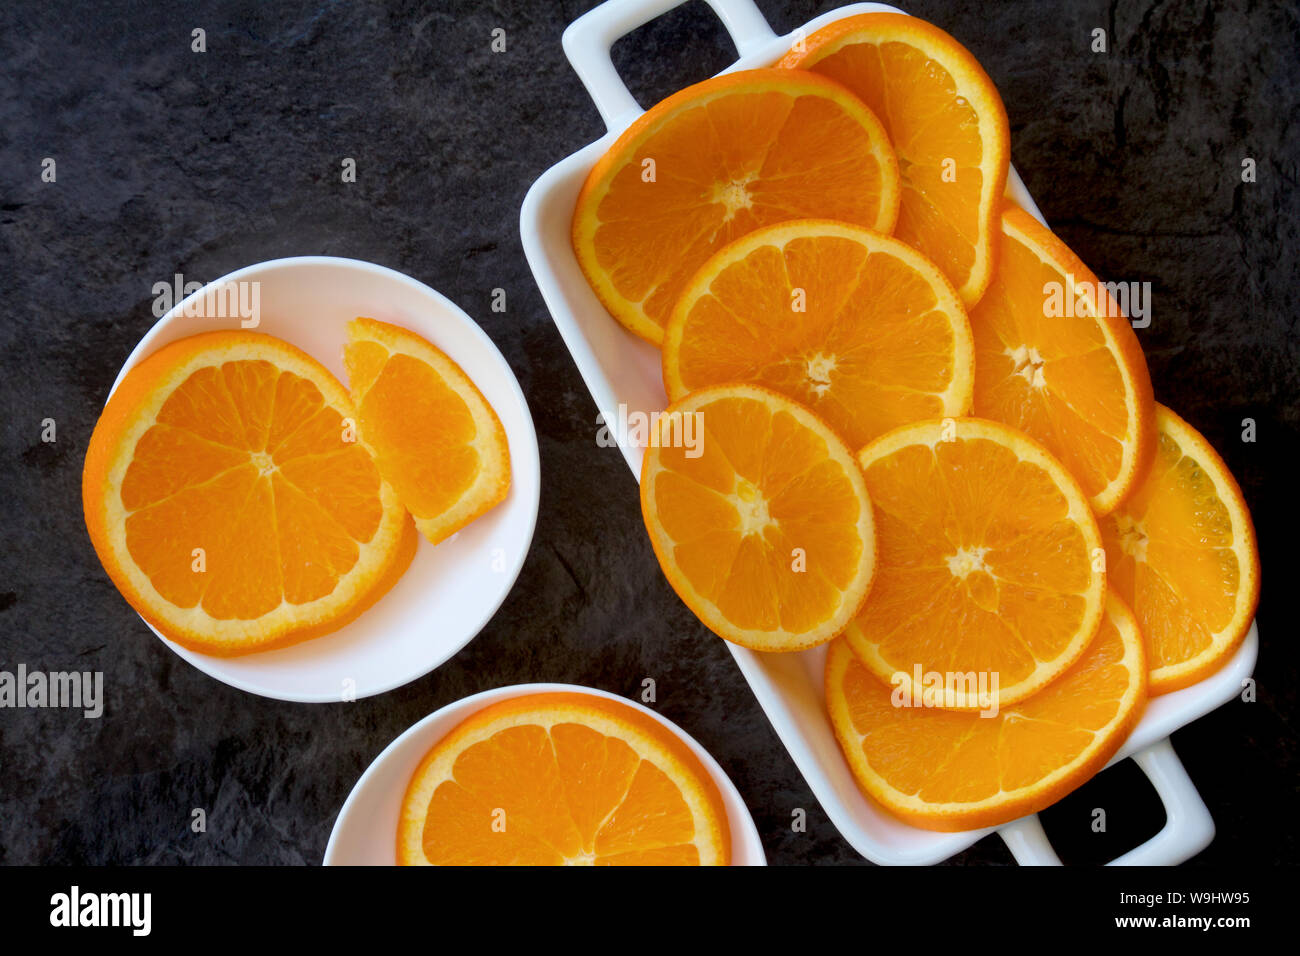 Slices of orange fruit on a white plate. Stock Photo